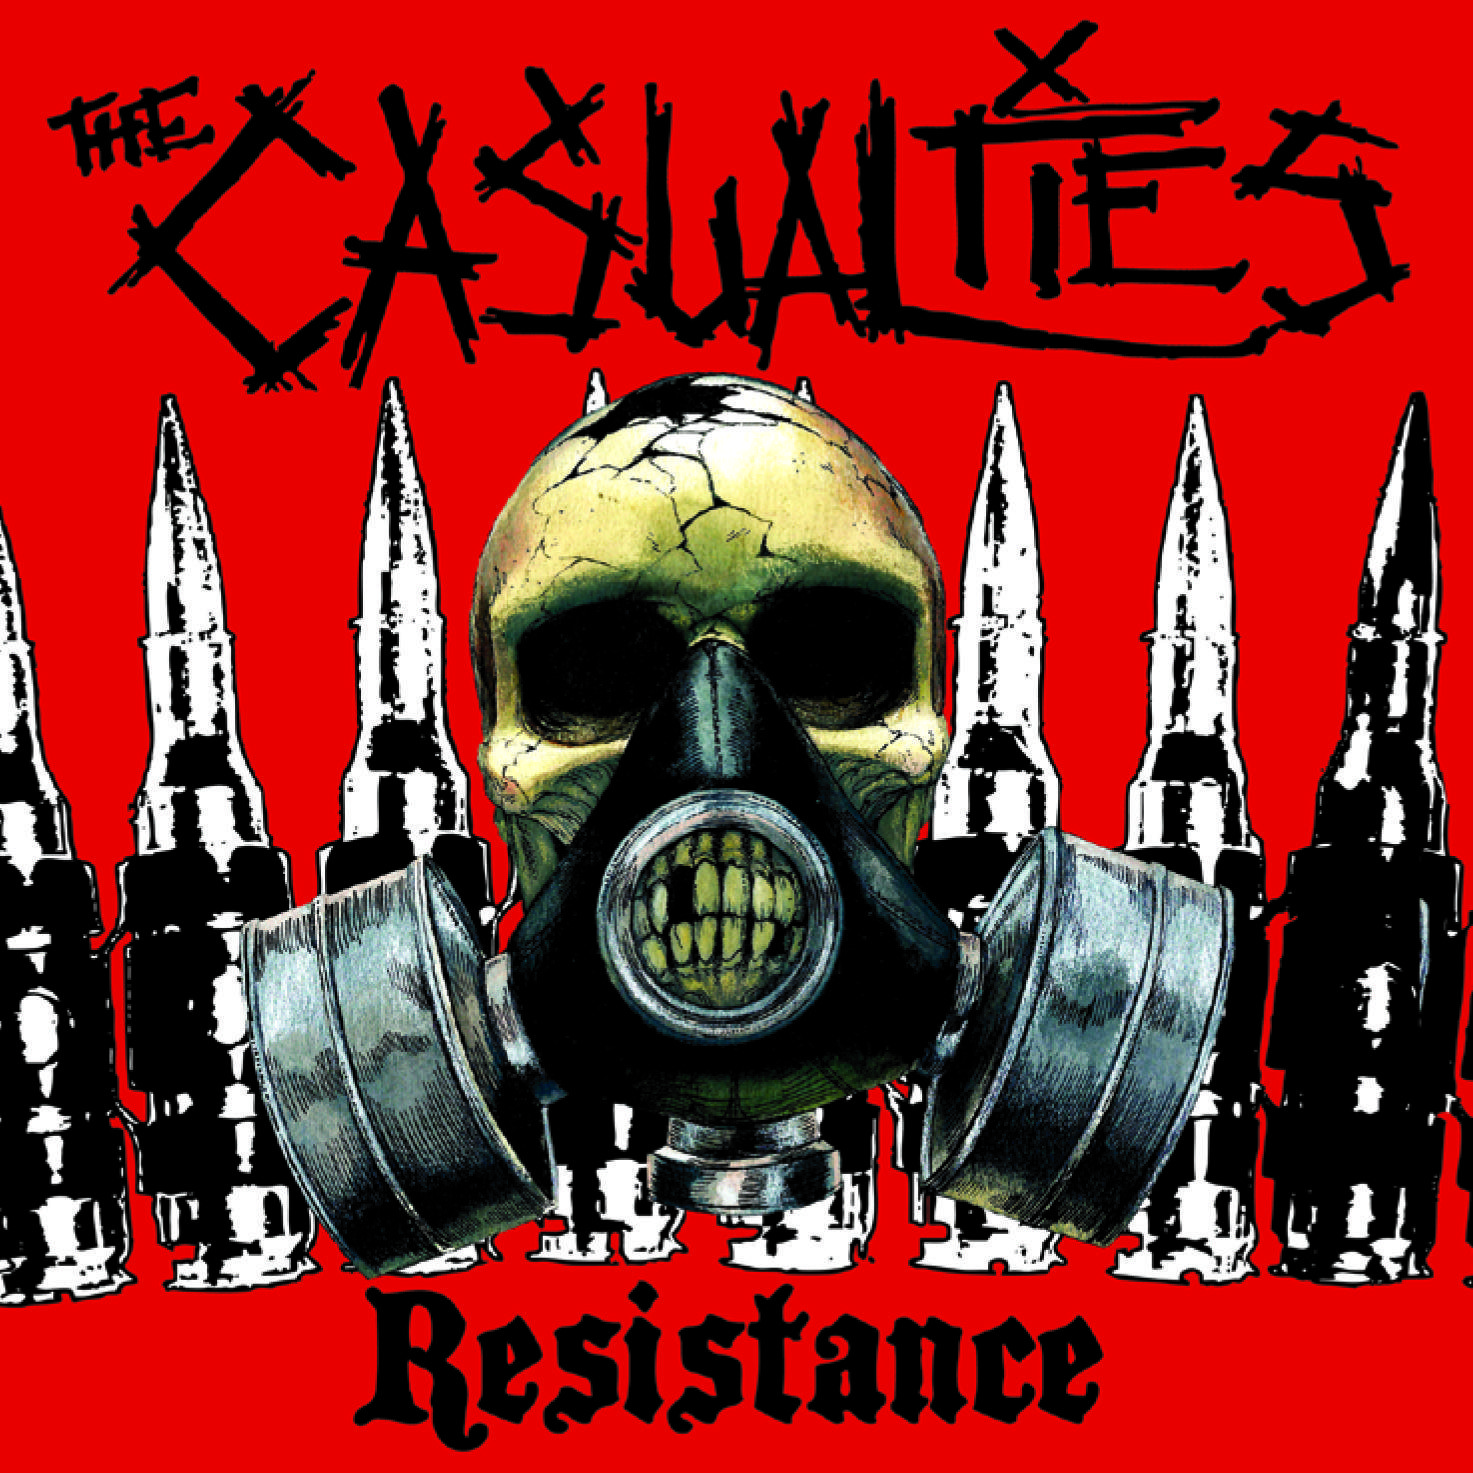 THE CASUALTIES hardcore punk rock dark skull ananrchy gas mask wallpaperx1473